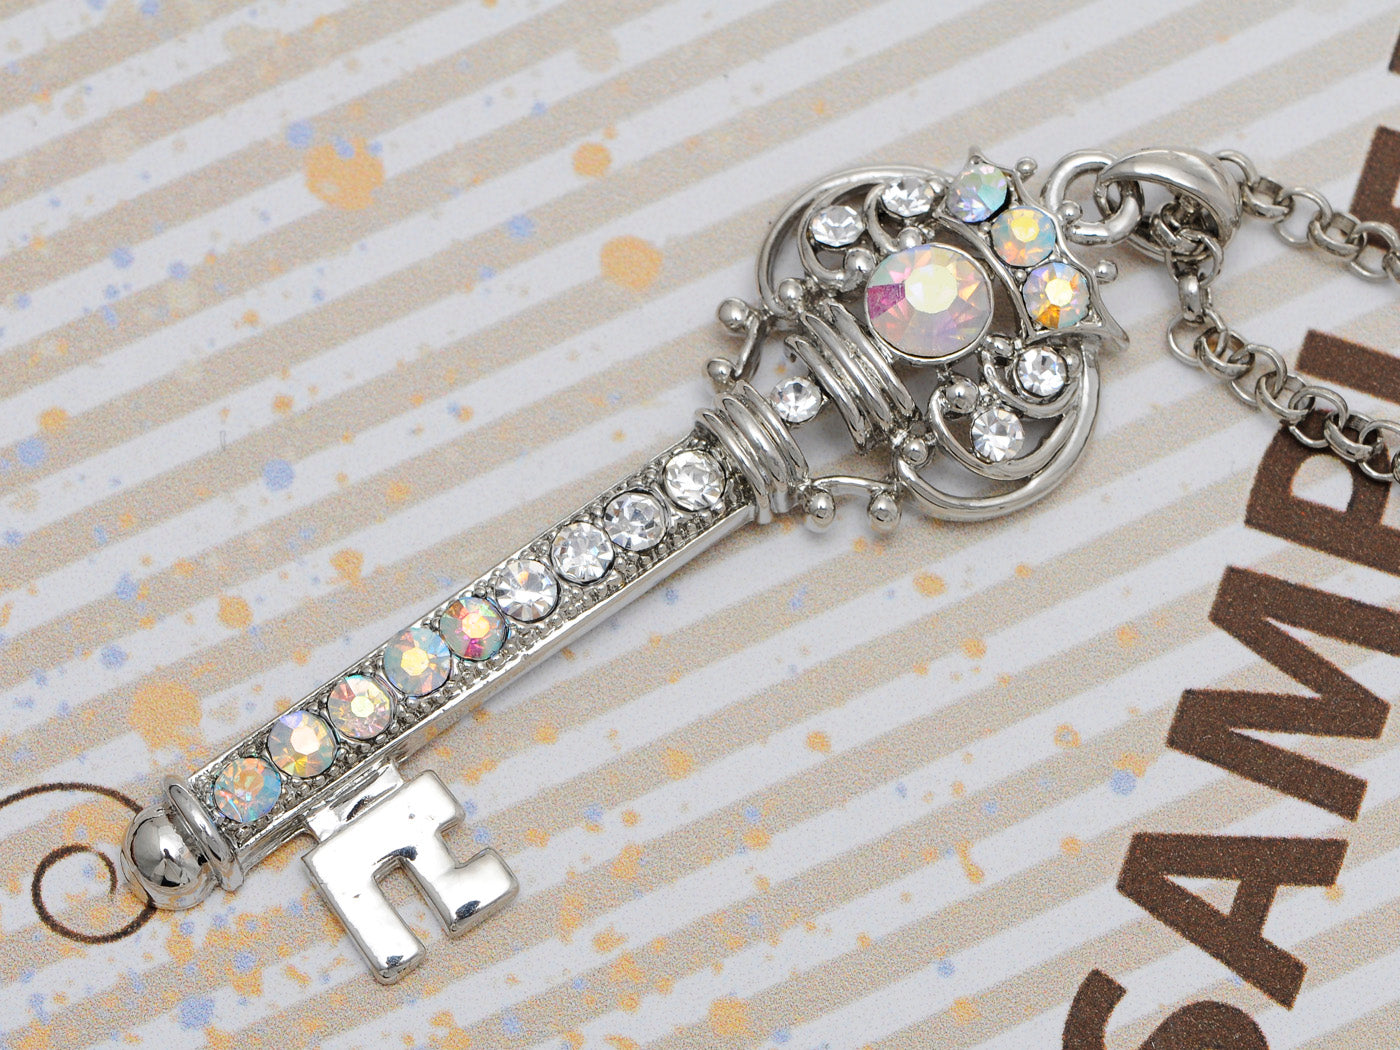 Ab Treasure Key Crown Lock Pendant Necklace